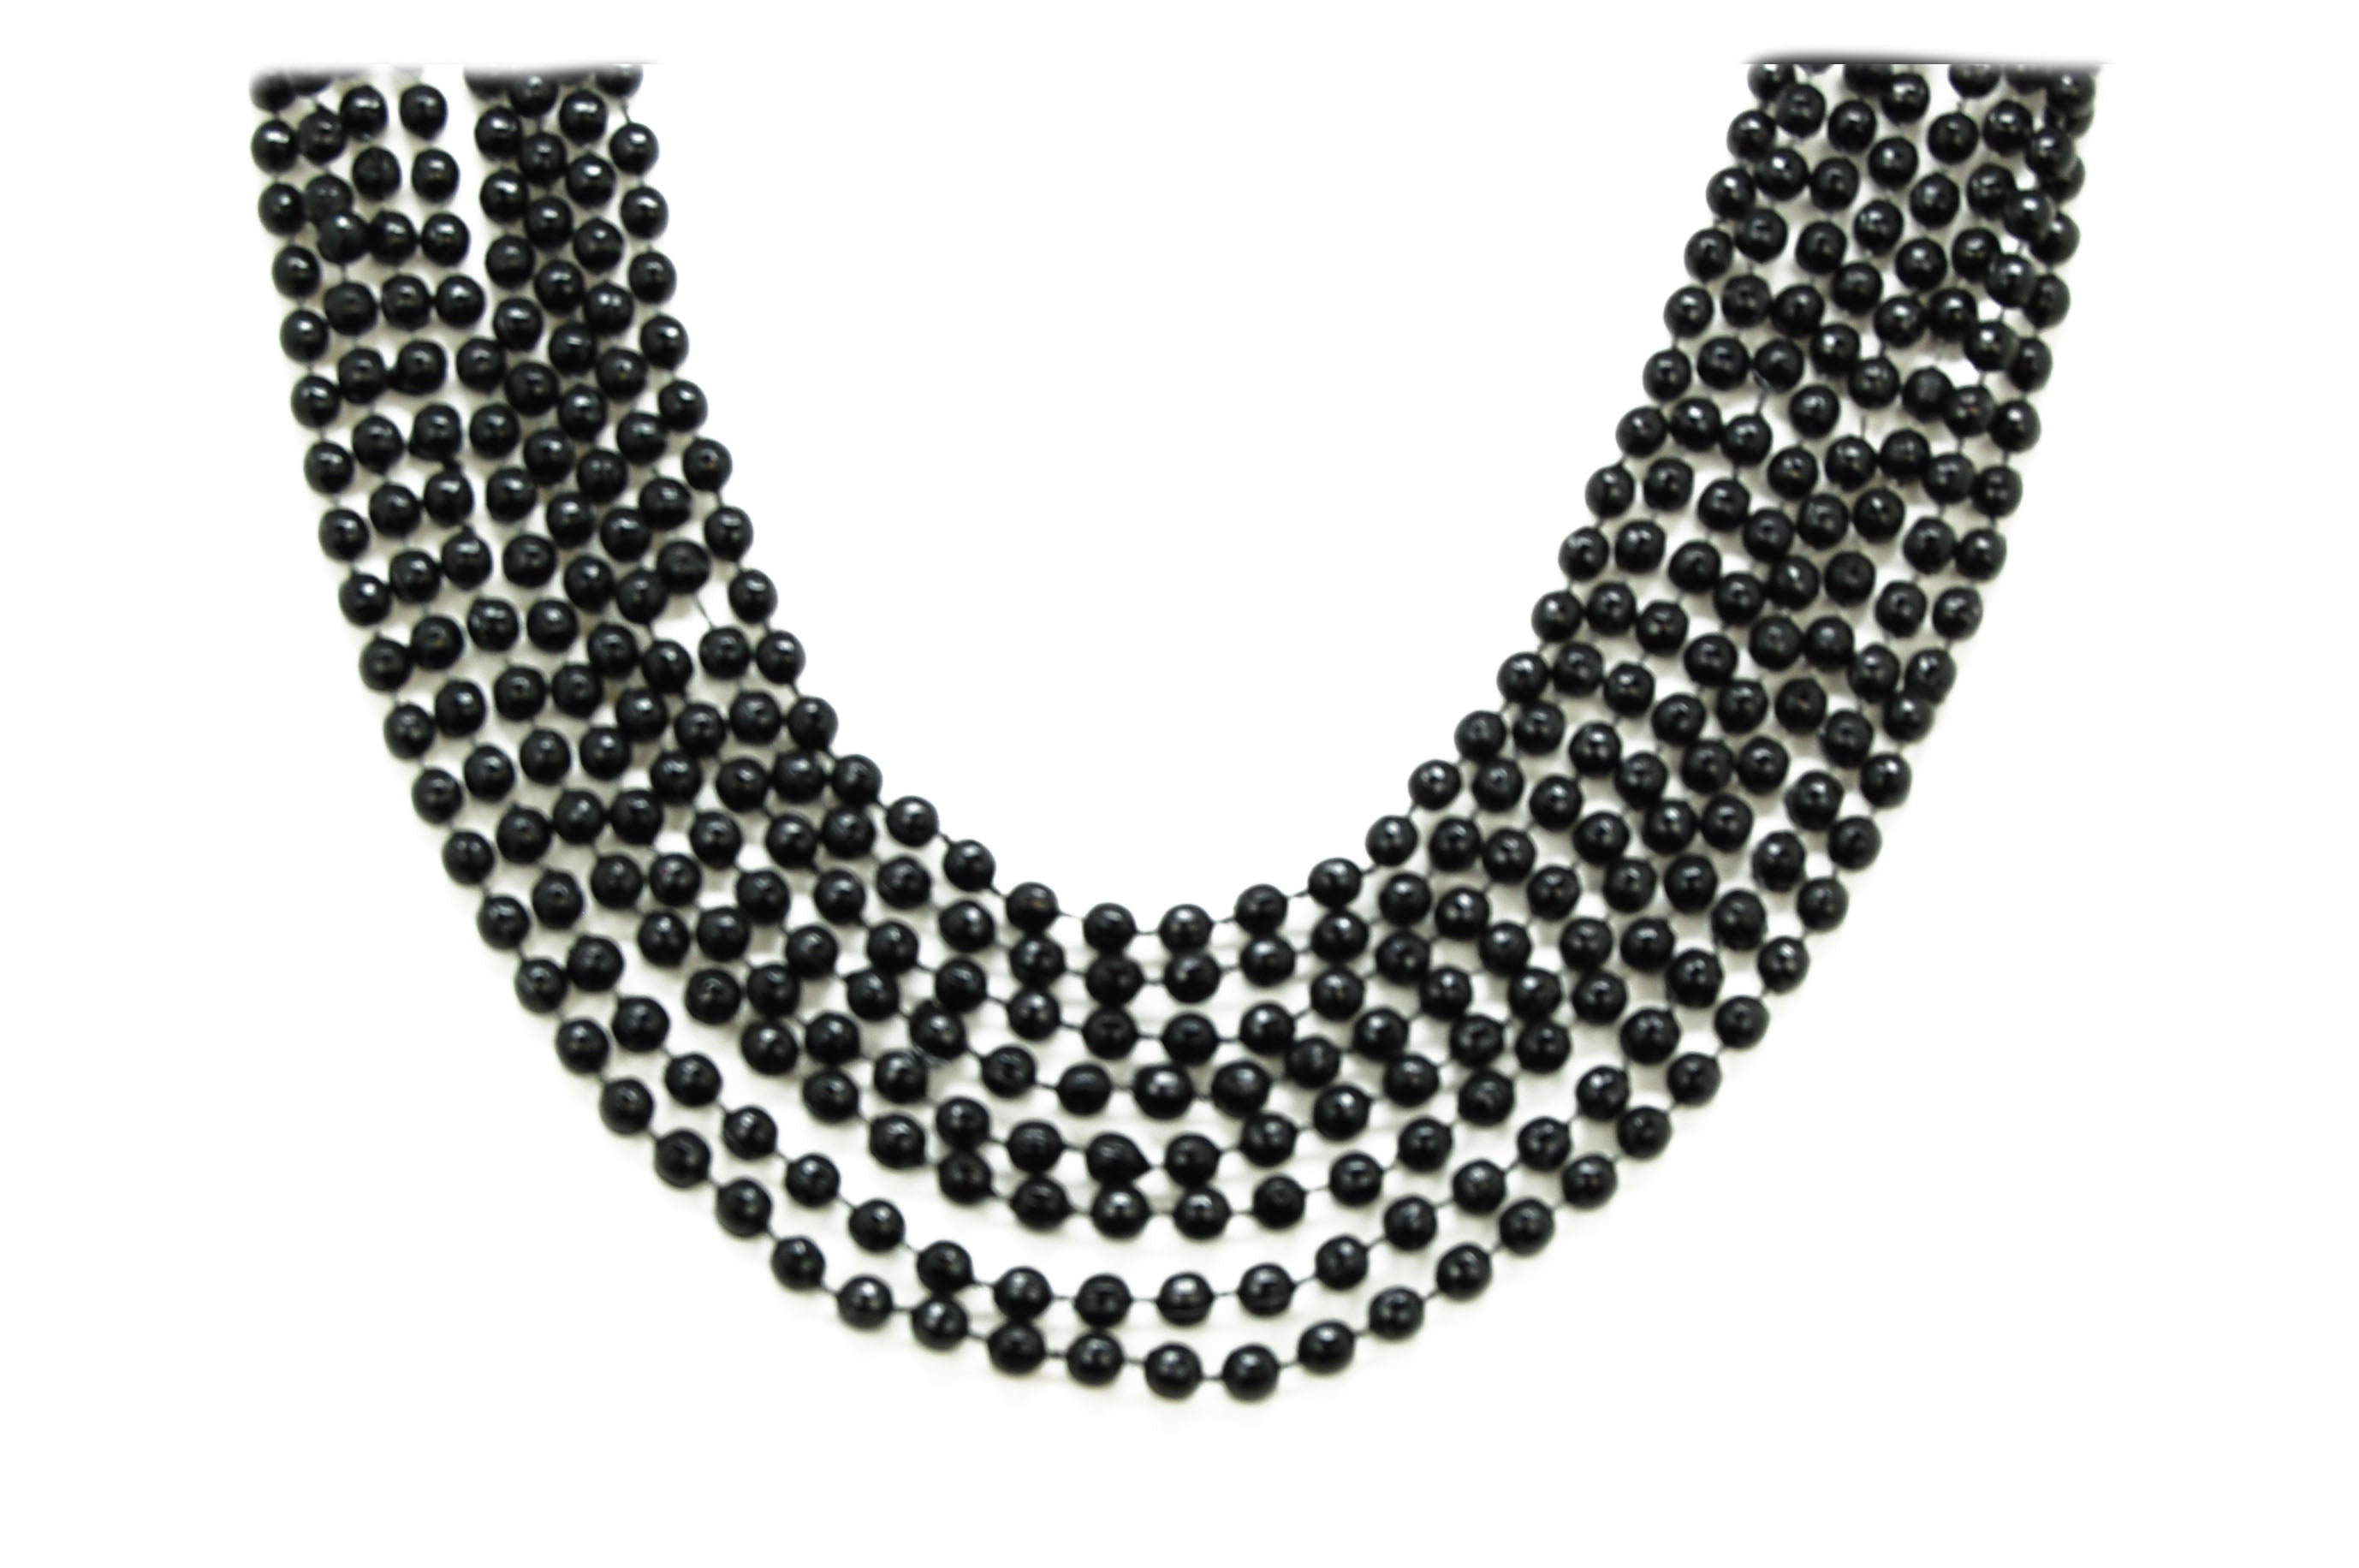 JULBEAR Bulk Halloween Beads Necklaces, 30 pcs Mardi Gras Black